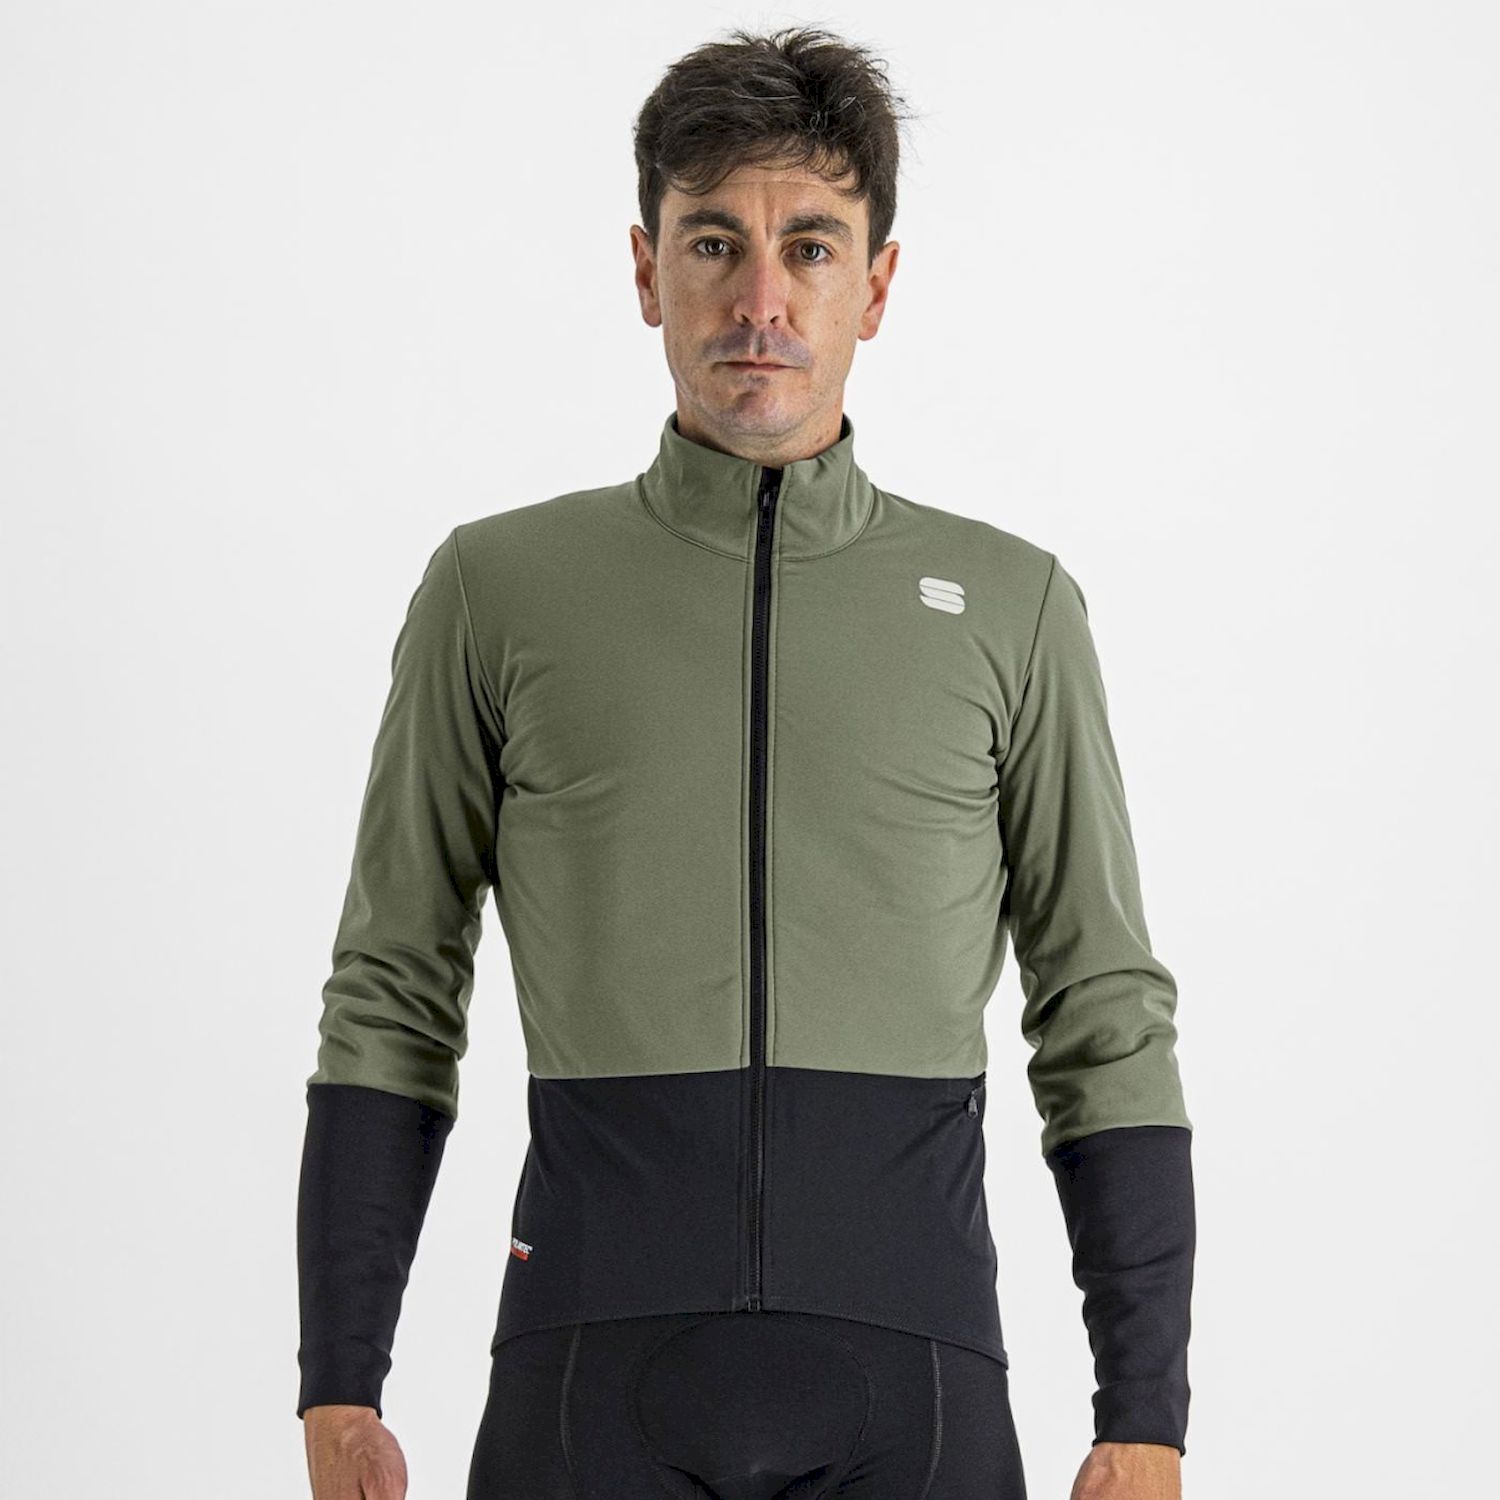 Sportful Total Comfort Jacket - Giacca ciclismo - Uomo